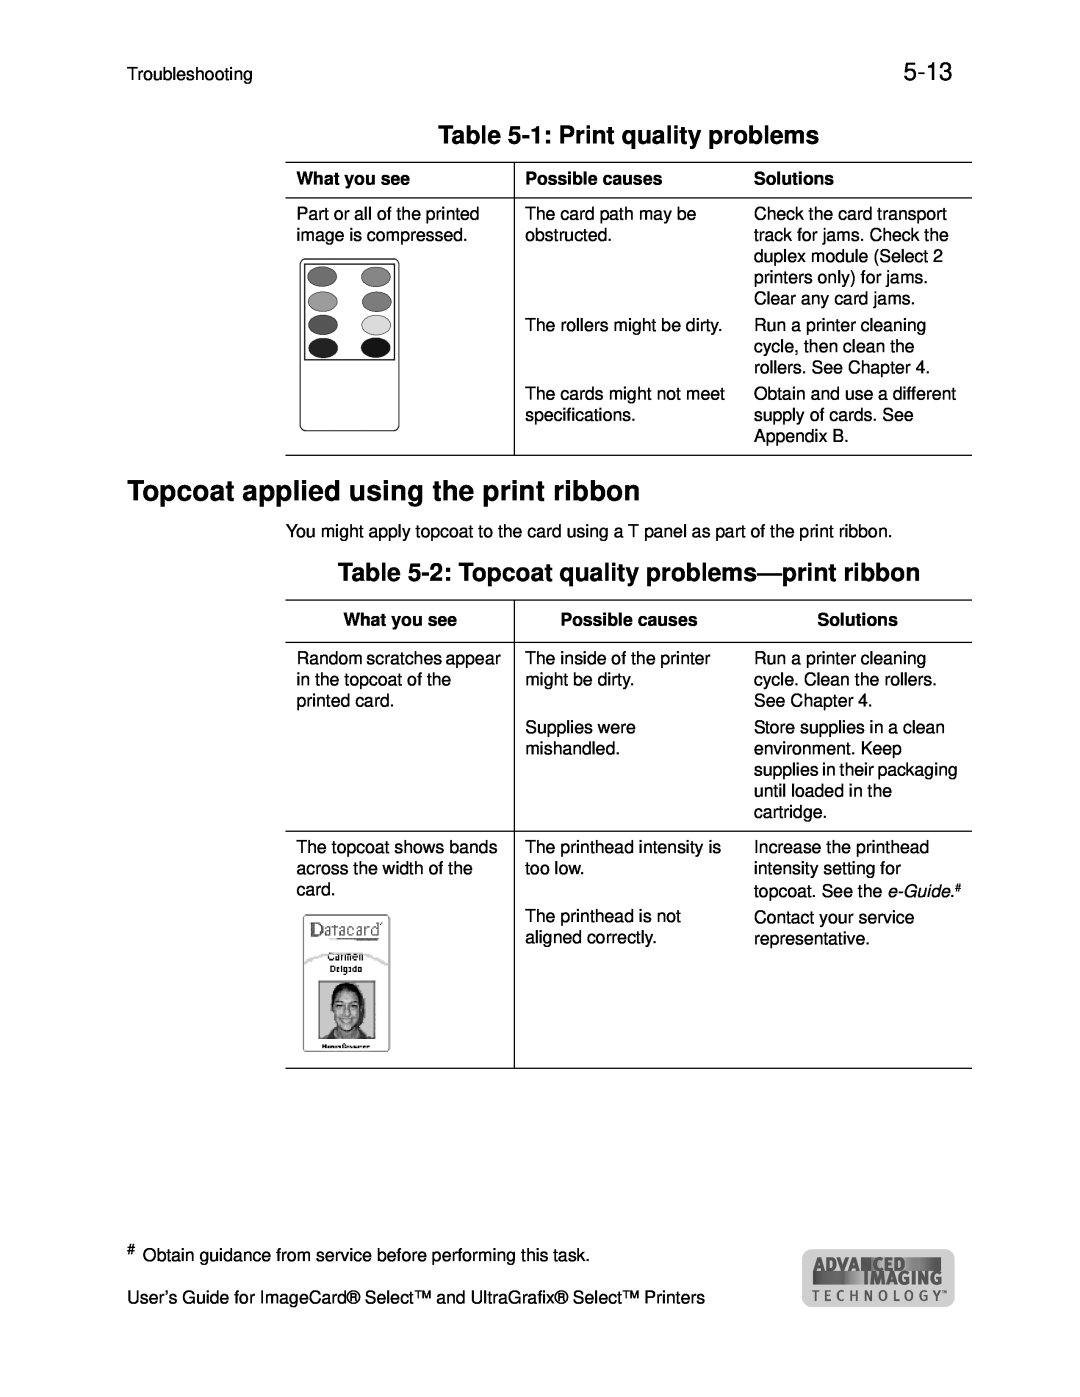 Datacard Group ImageCard SelectTM and UltraGrafix SelectTM Printers manual Topcoat applied using the print ribbon, 5-13 